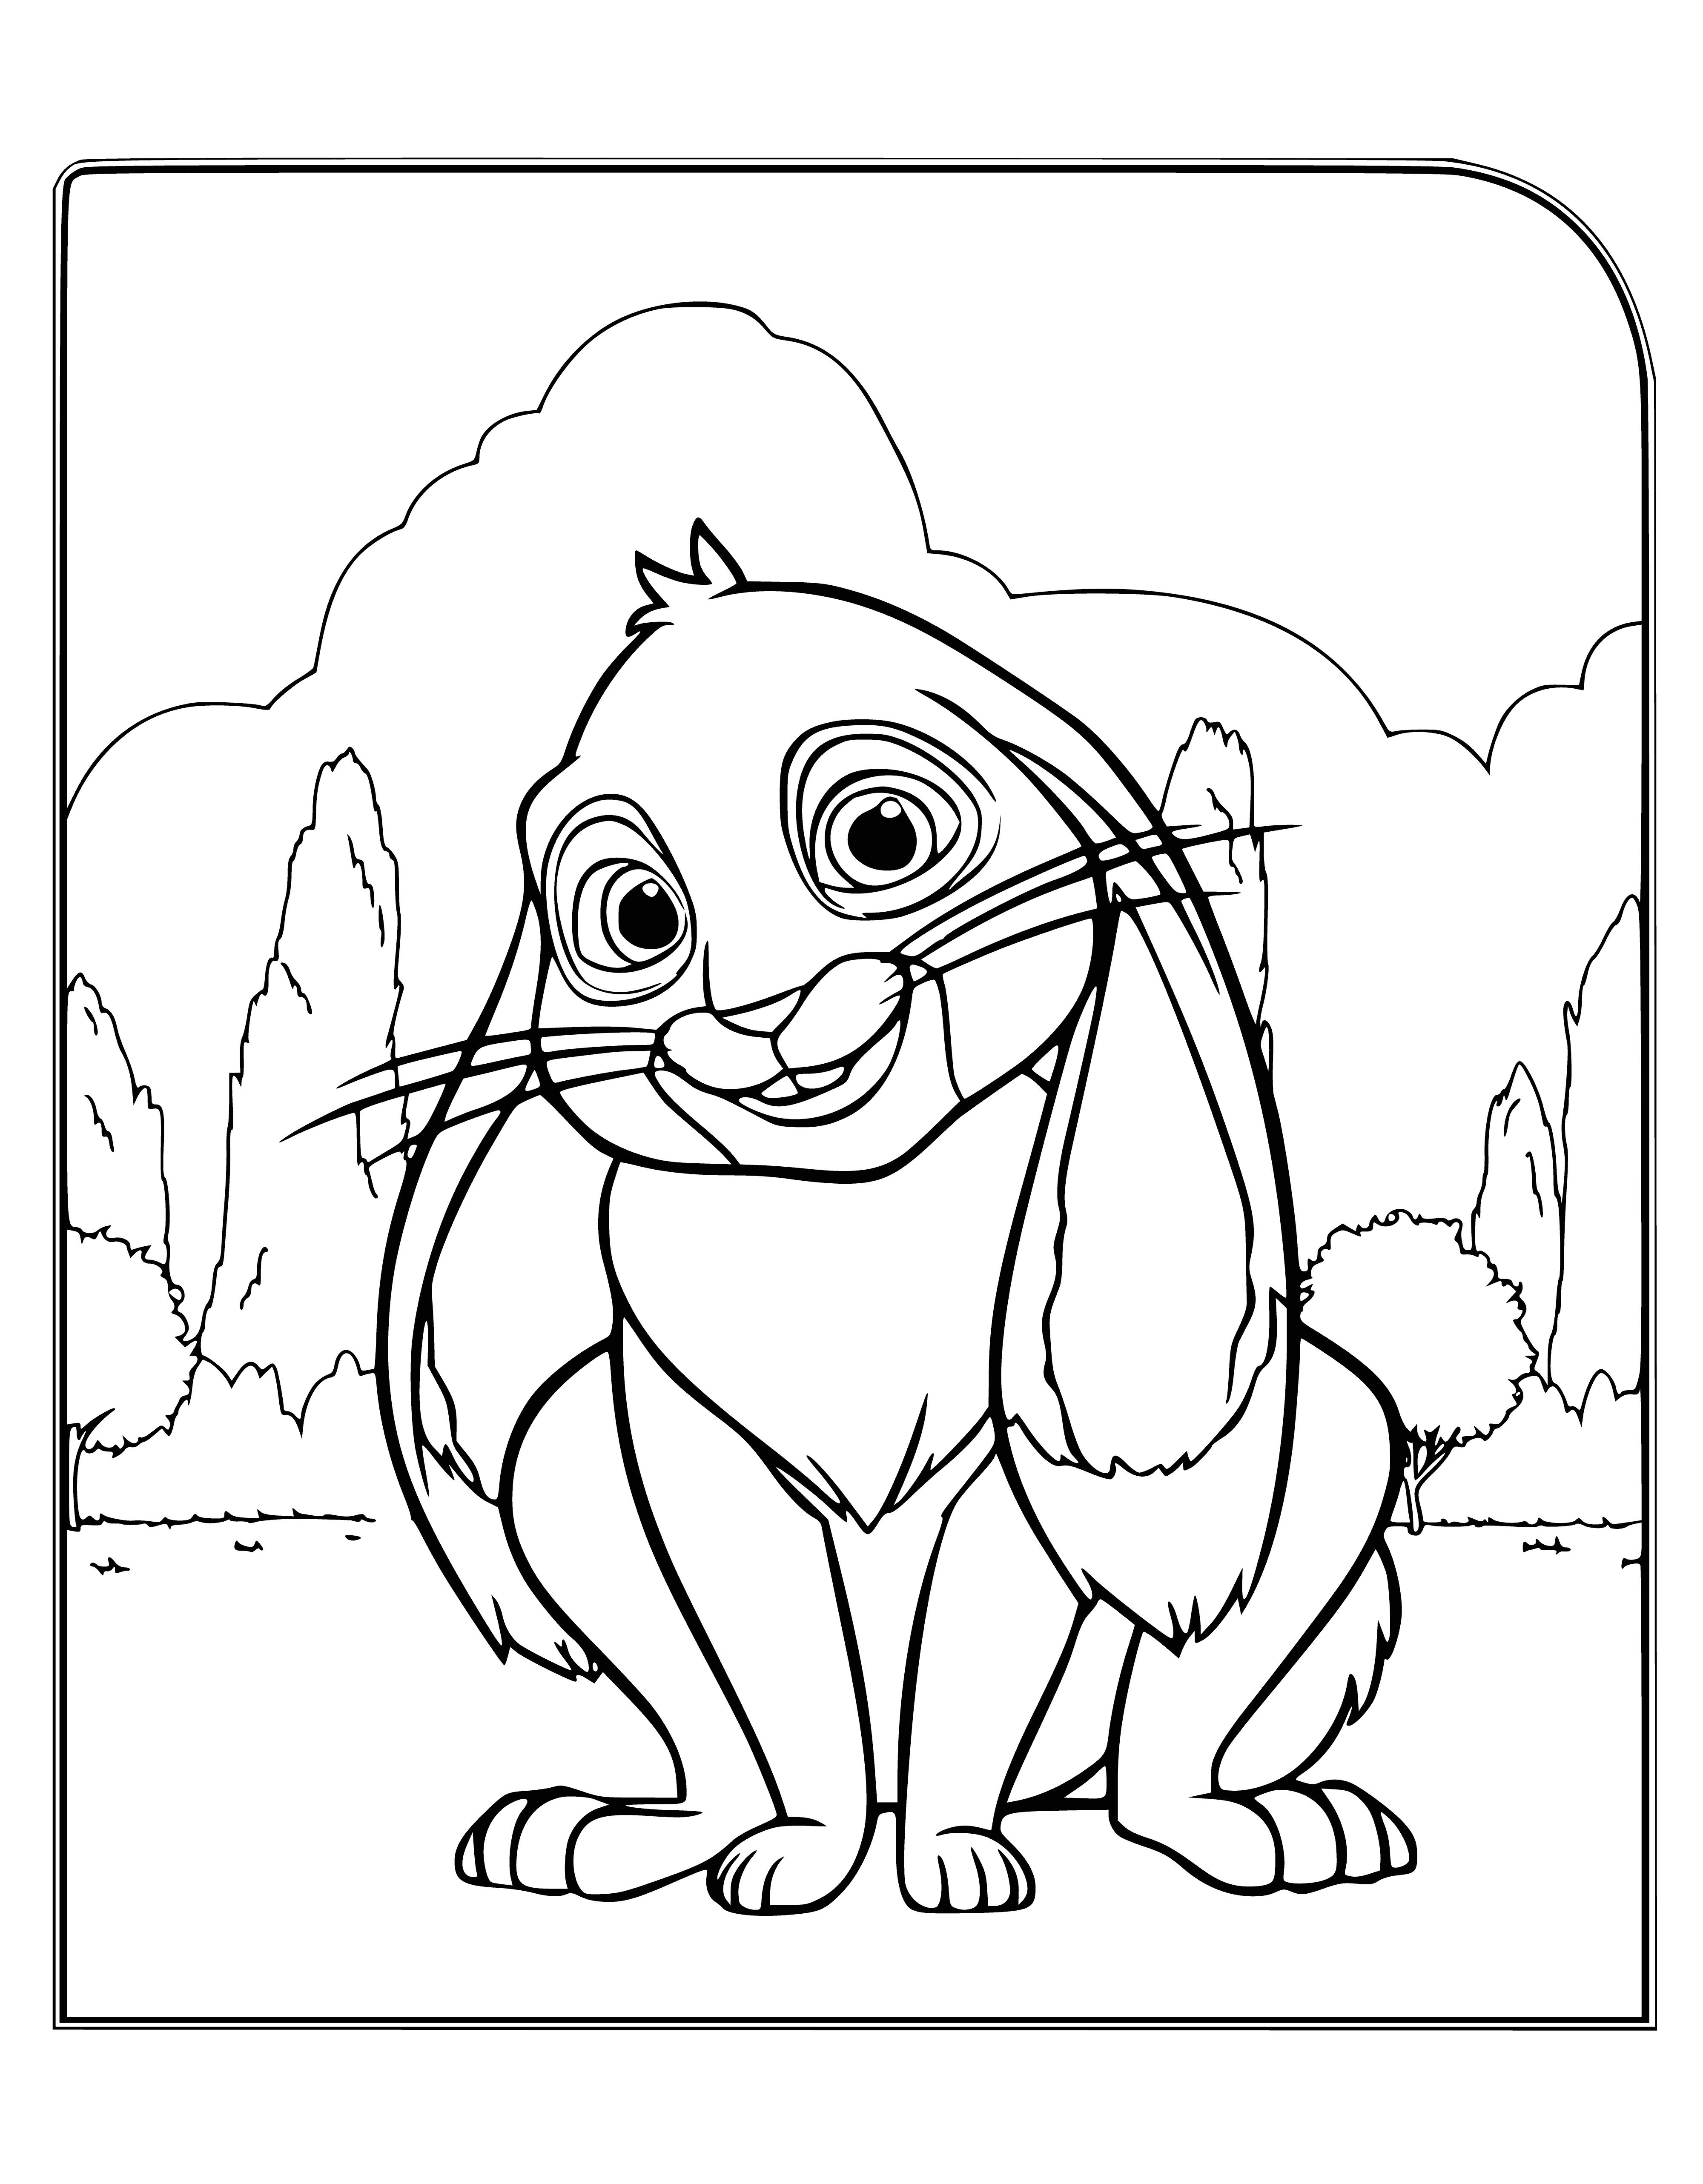 Sofia's favorite - Clover rabbit coloring page